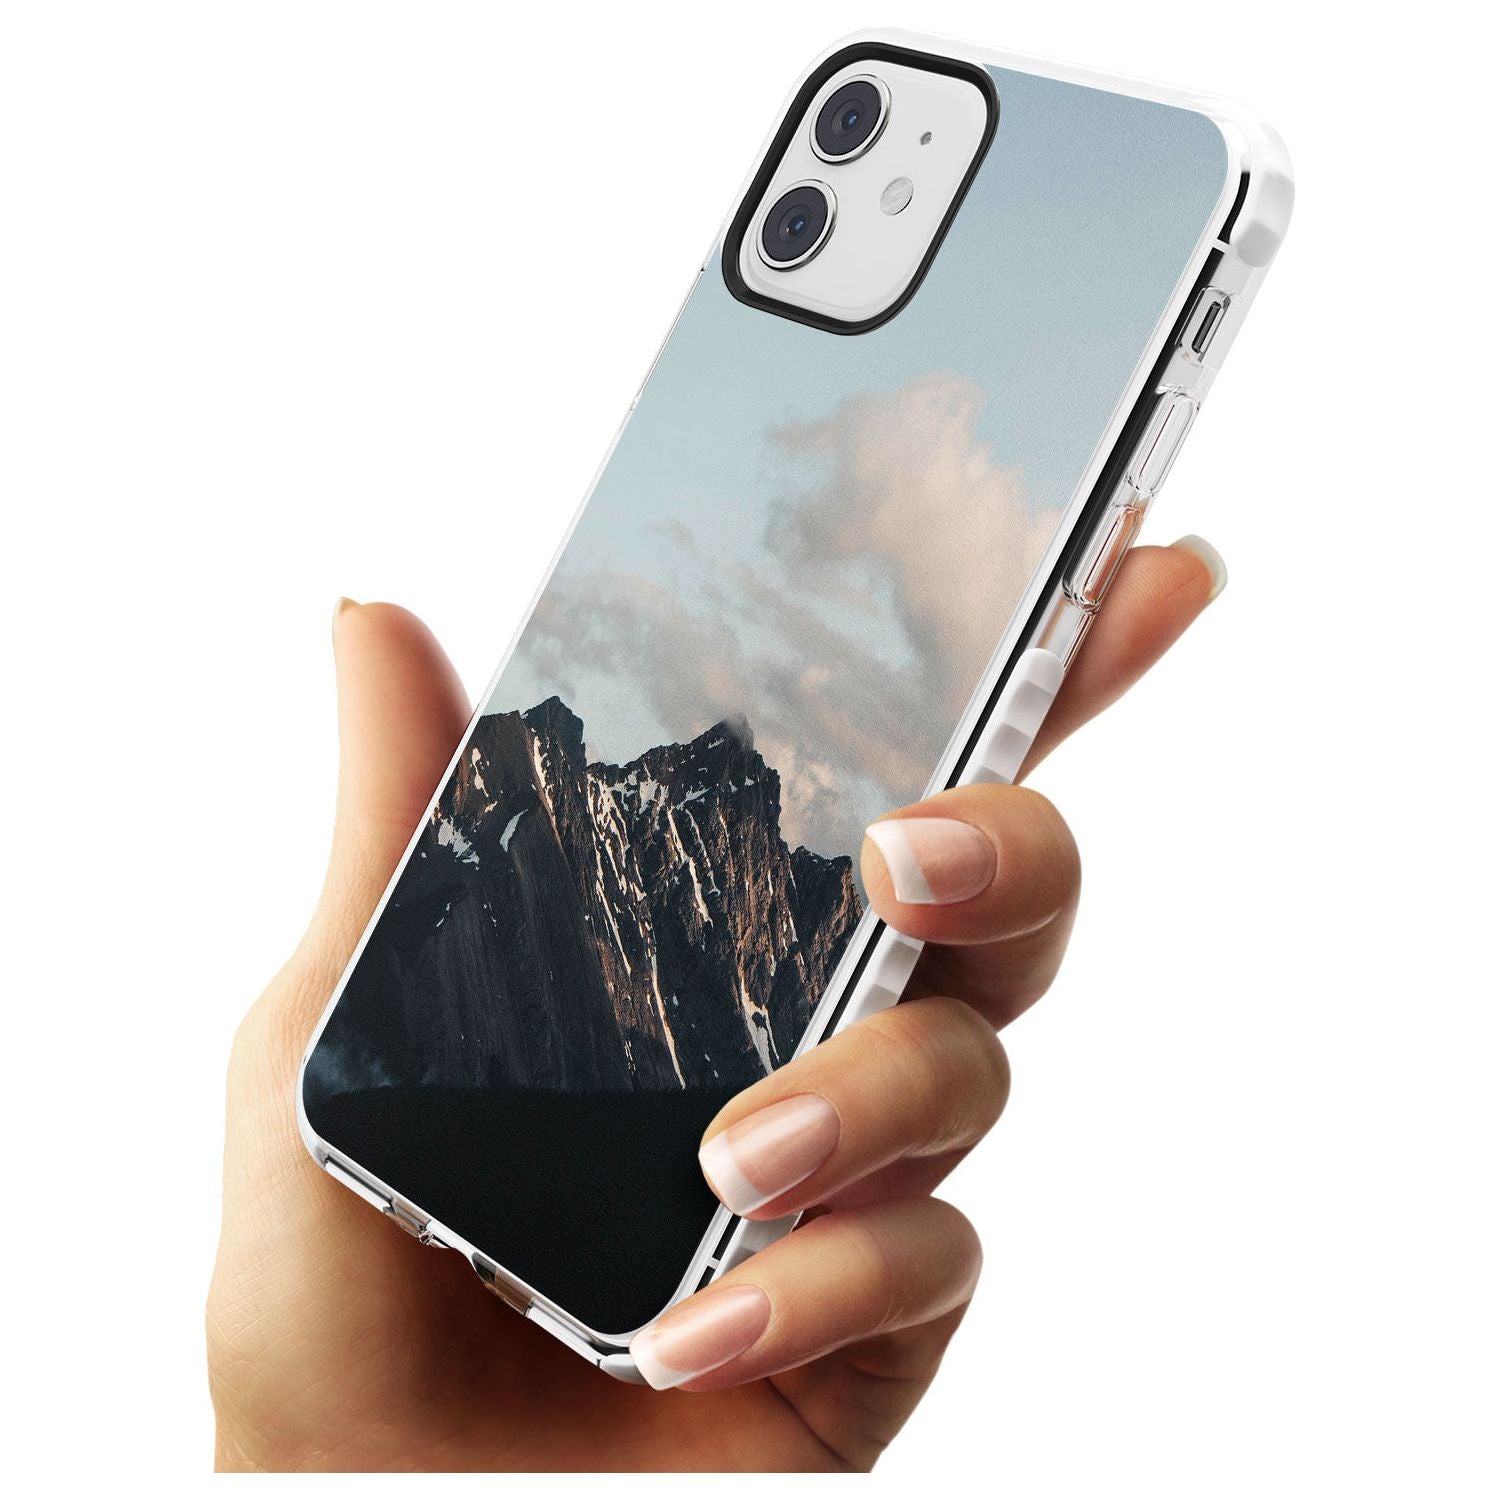 Mountain Range Photograph Impact Phone Case for iPhone 11